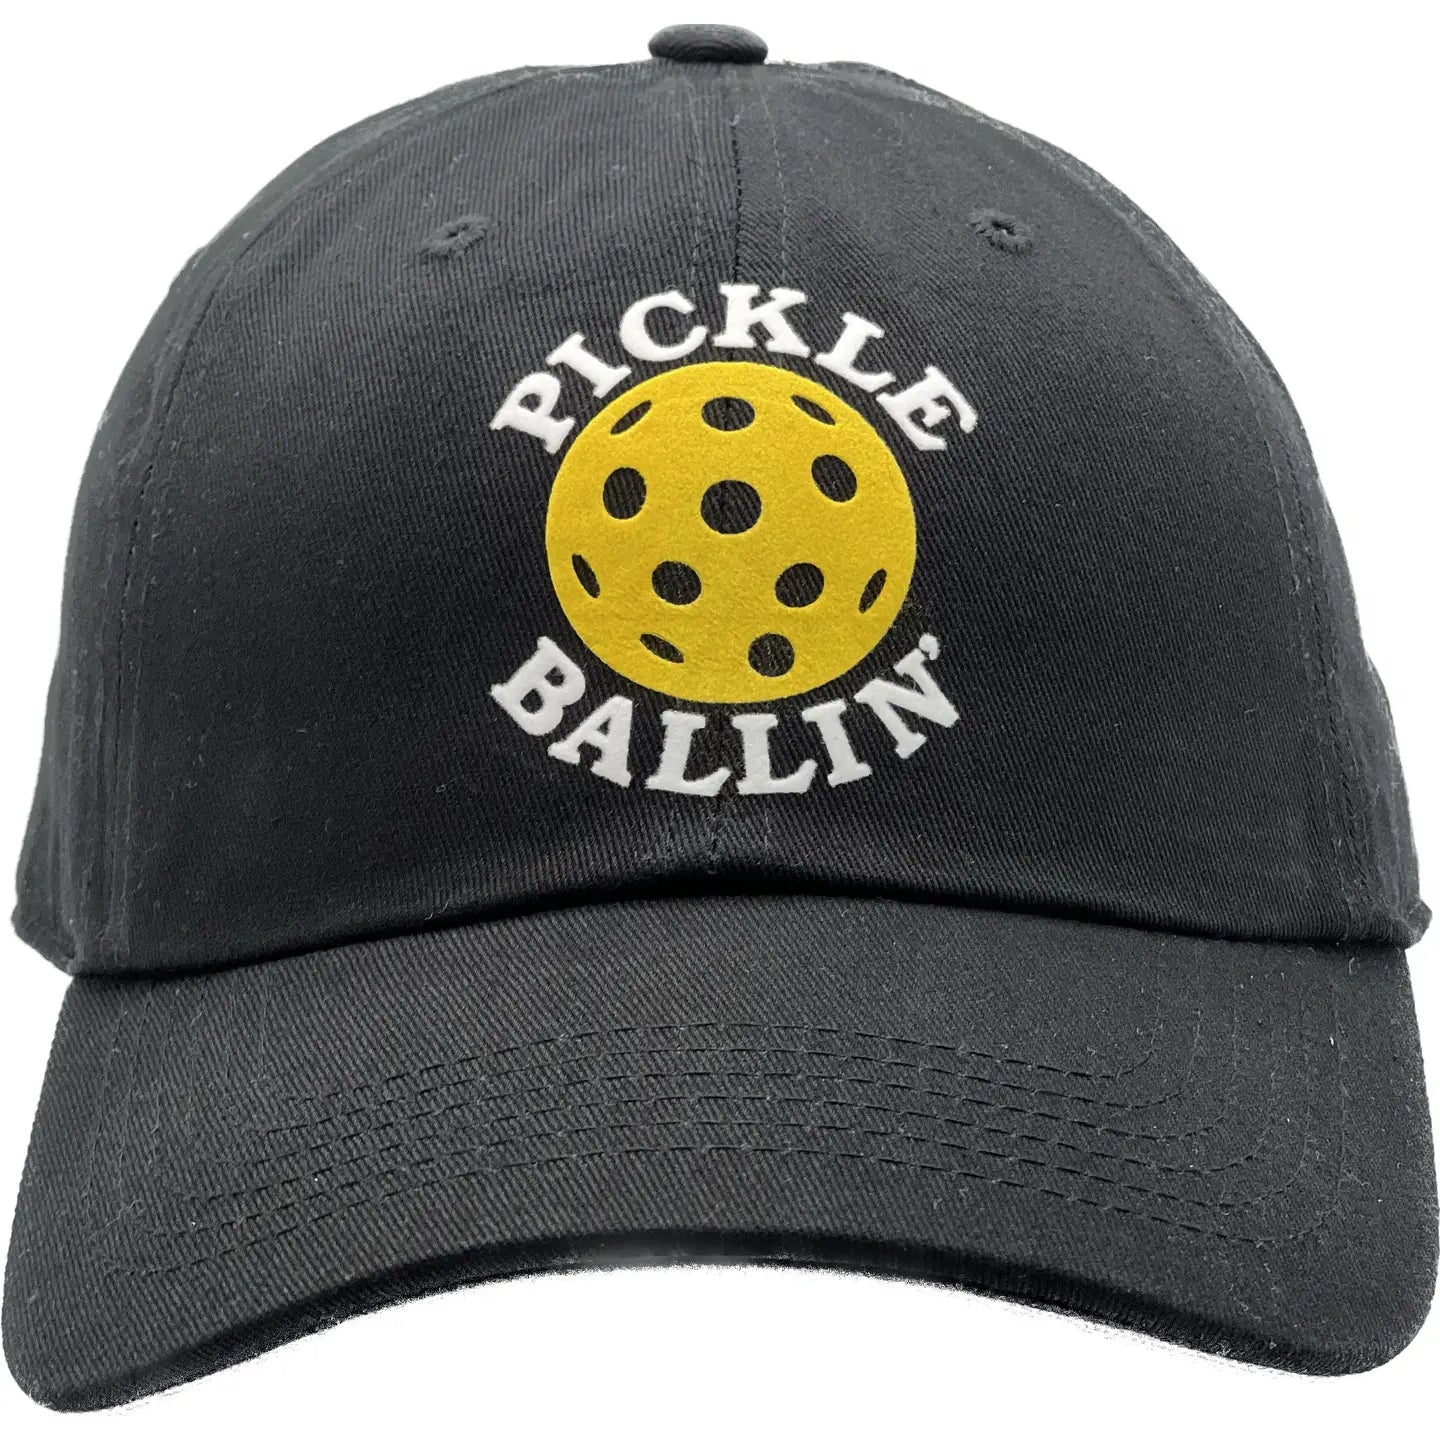 PICKLE BALLIN Black cap - PRE-ORDER ONLY